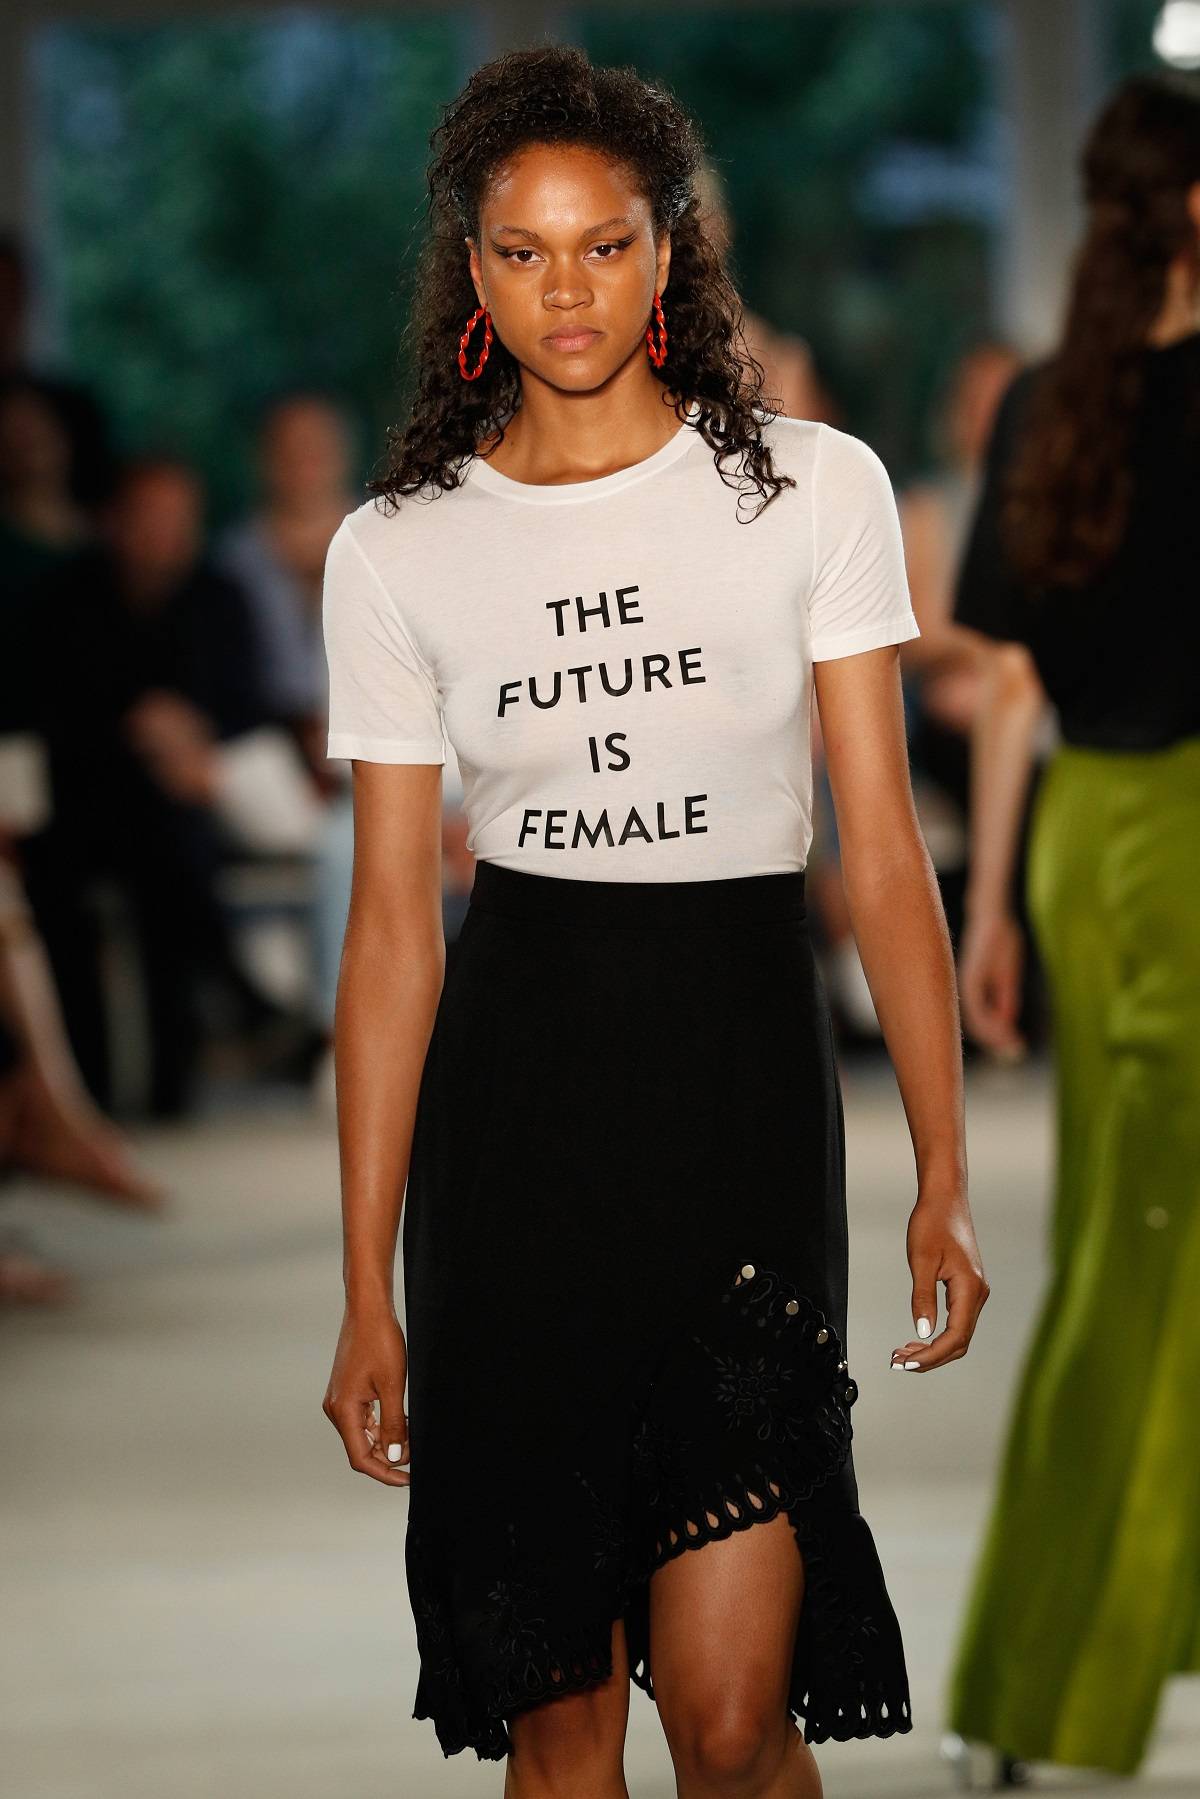 Feministyczny T-shirt projektu Prabala Gurunga